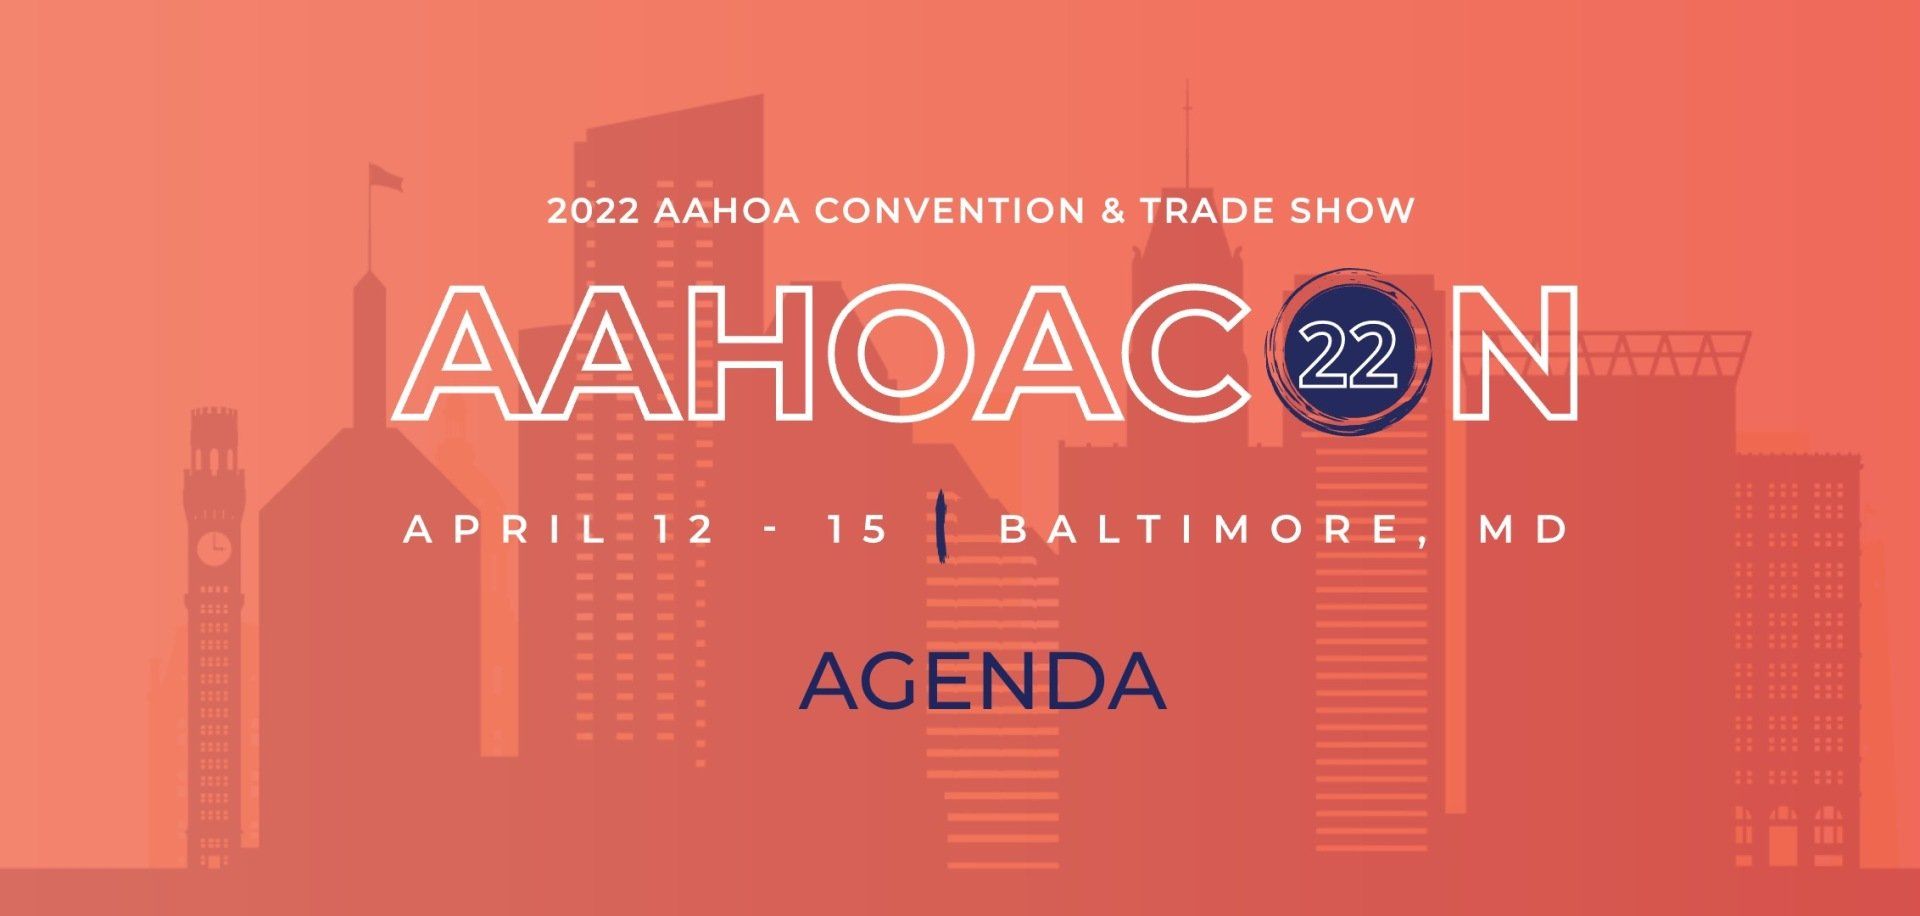 AAHOA Convention & Tradeshow 2022 Agenda